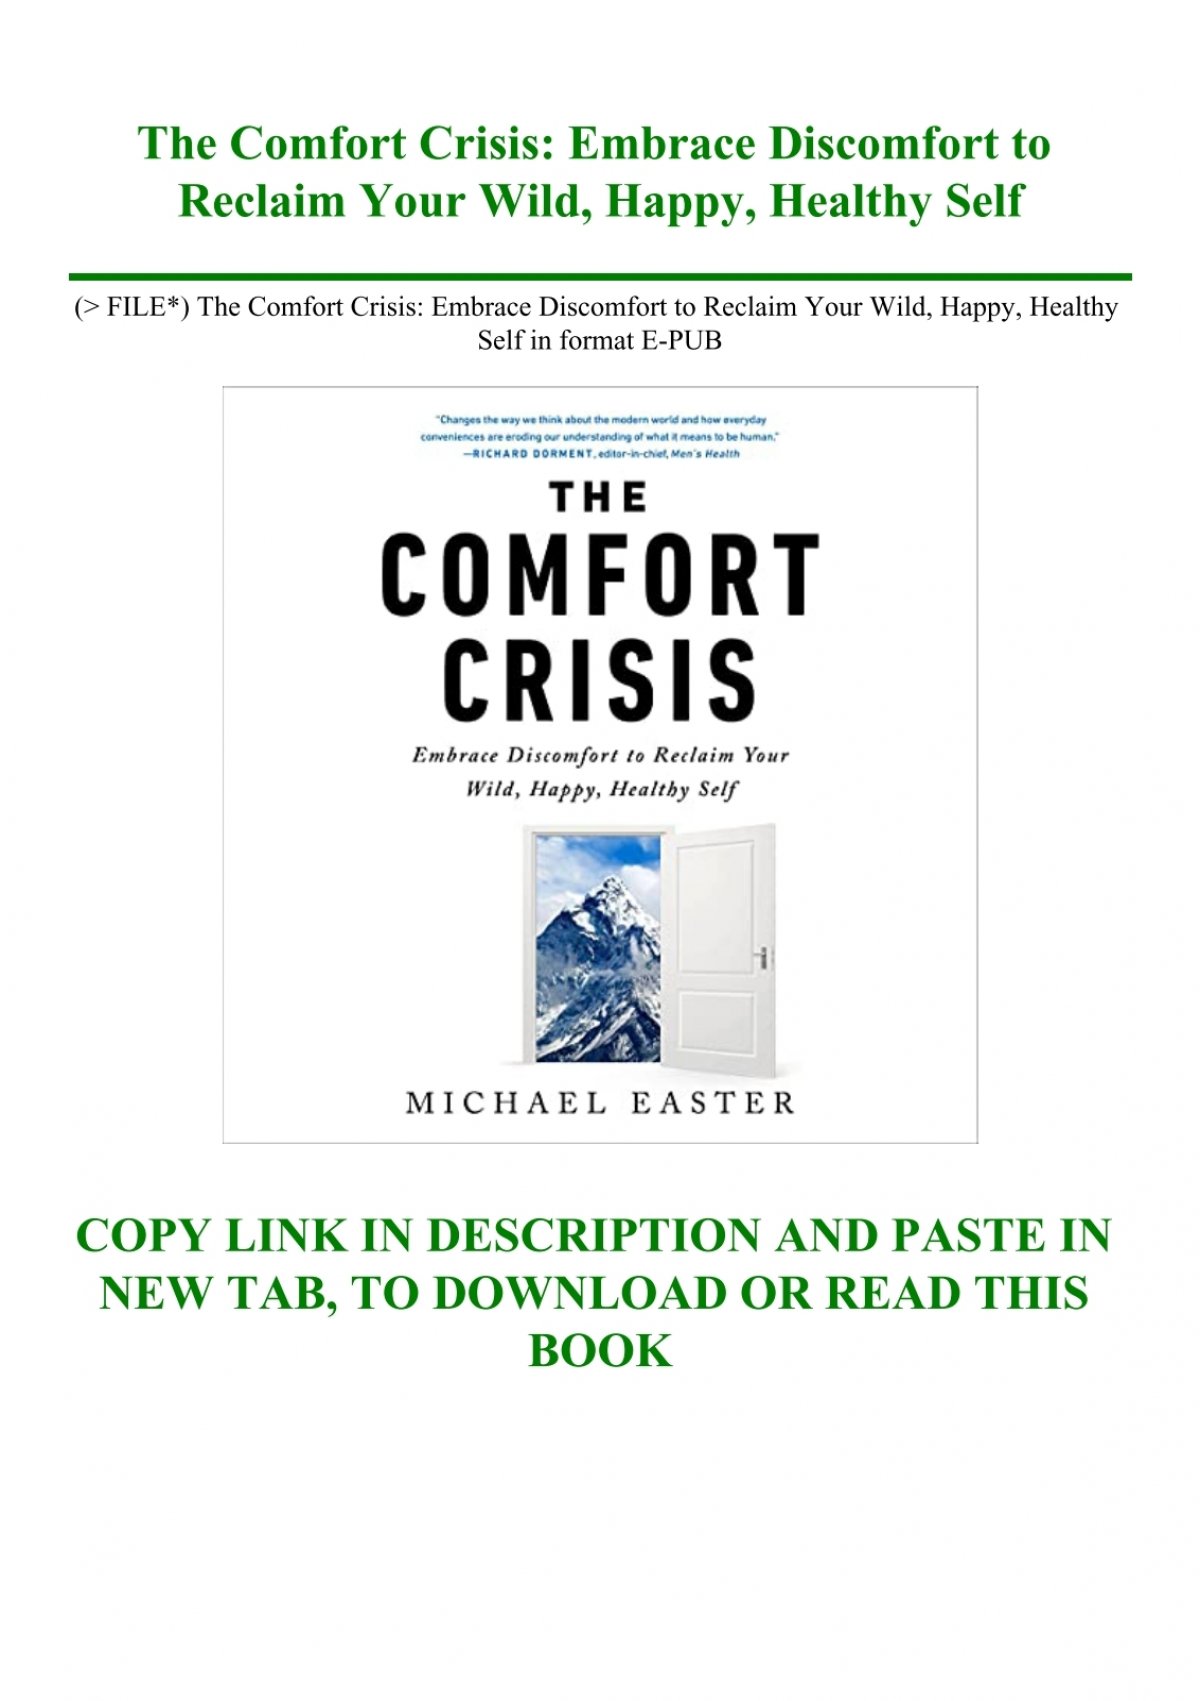 The Comfort Crisis: Embrace Discomfort To Reclaim Your Wild, Happy